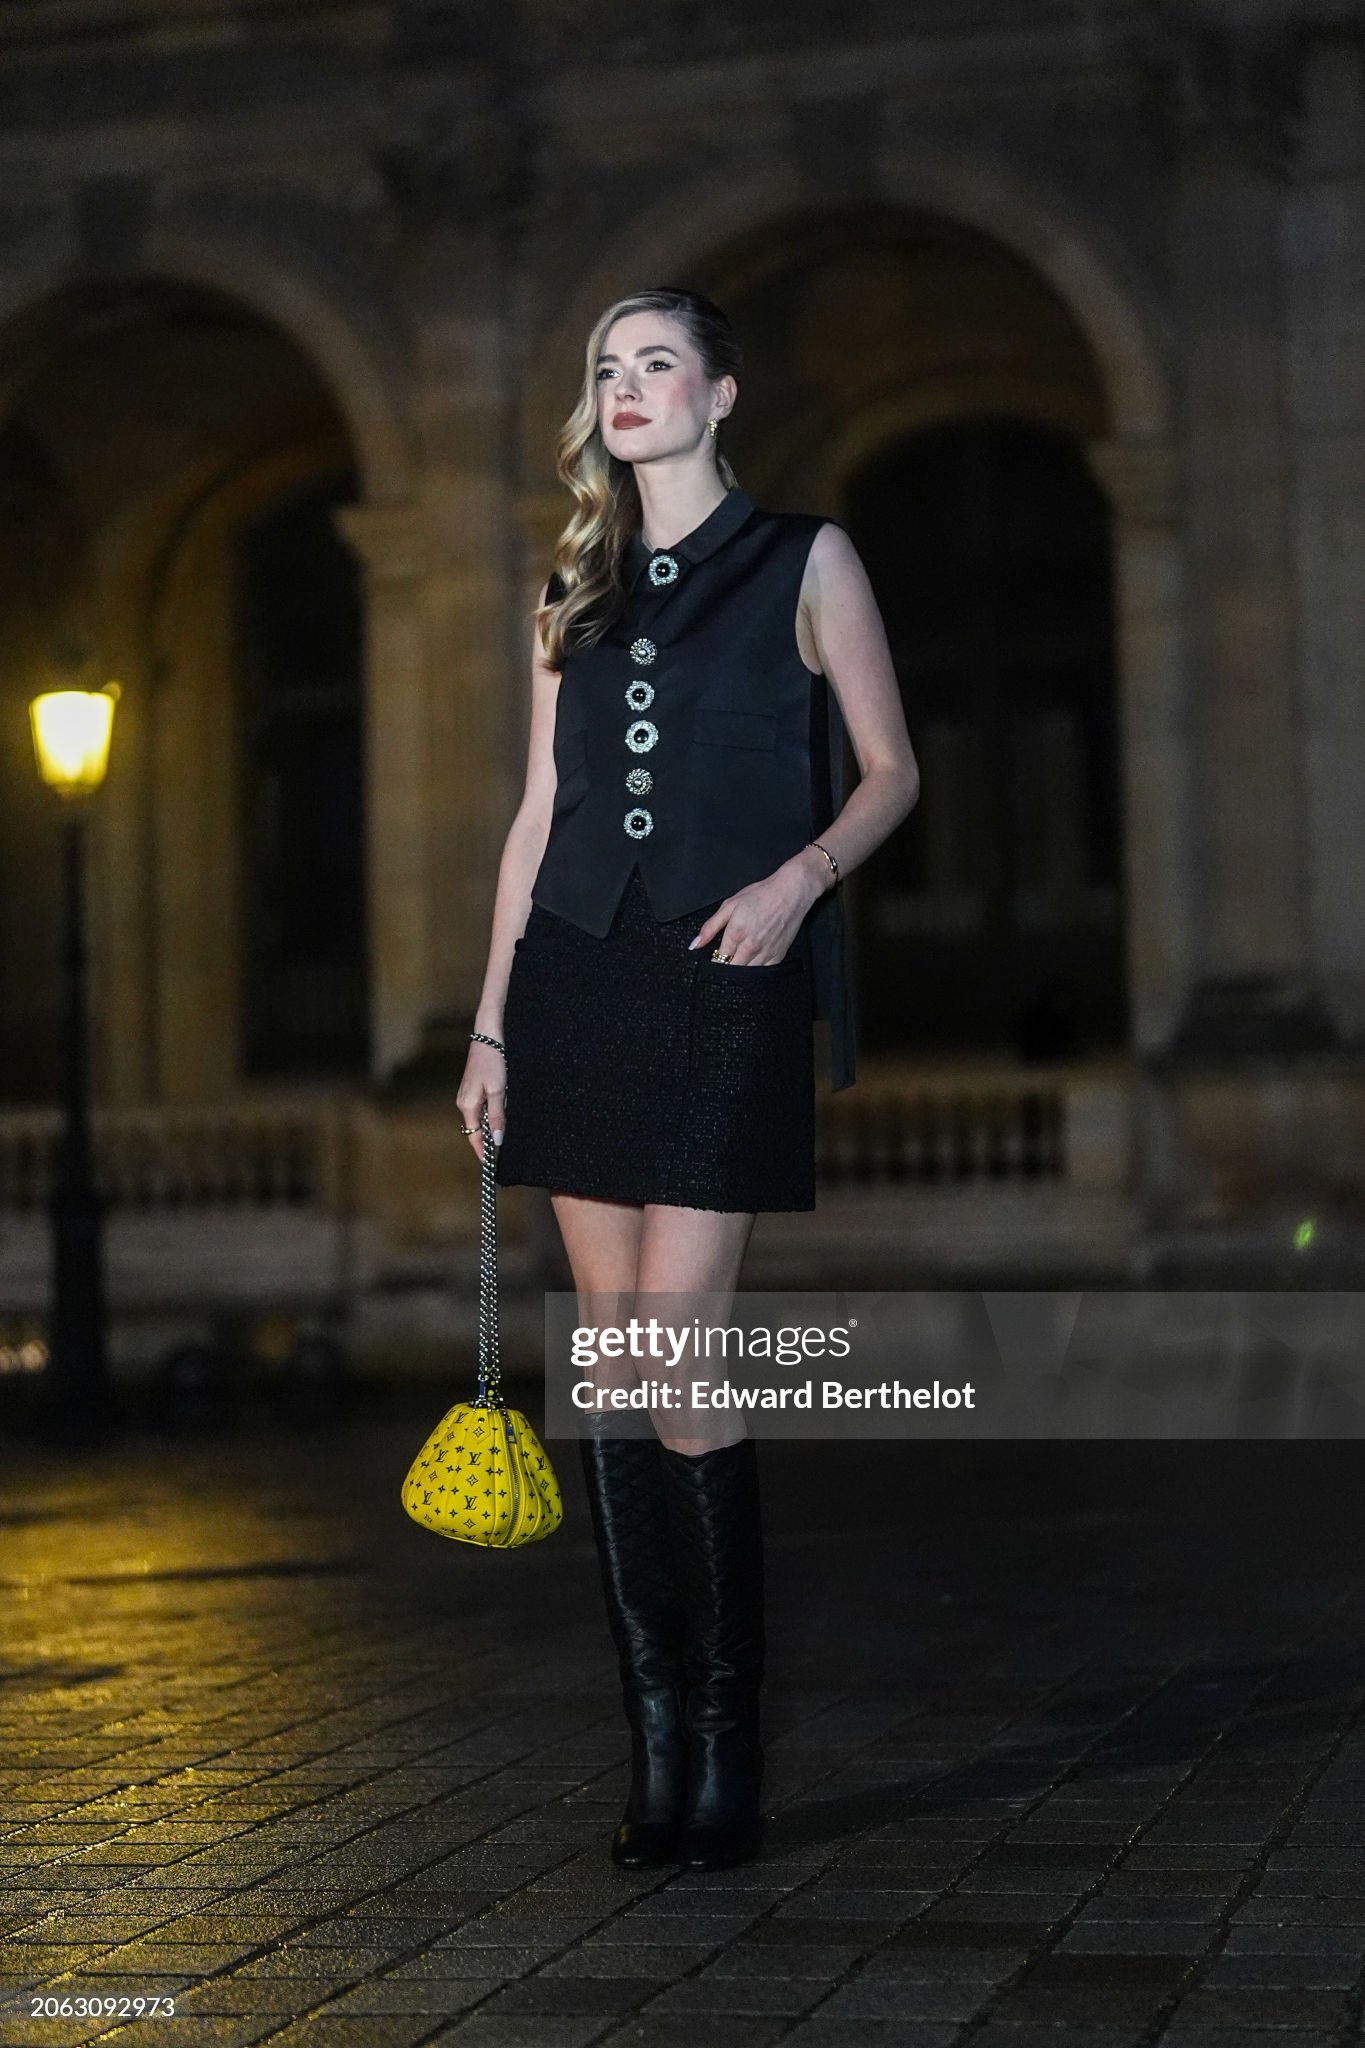 paris-france-zita-dhauteville-wears-a-sleeveless-waistcoat-a-black-mini-skirt-a-yellow-bag.jpg